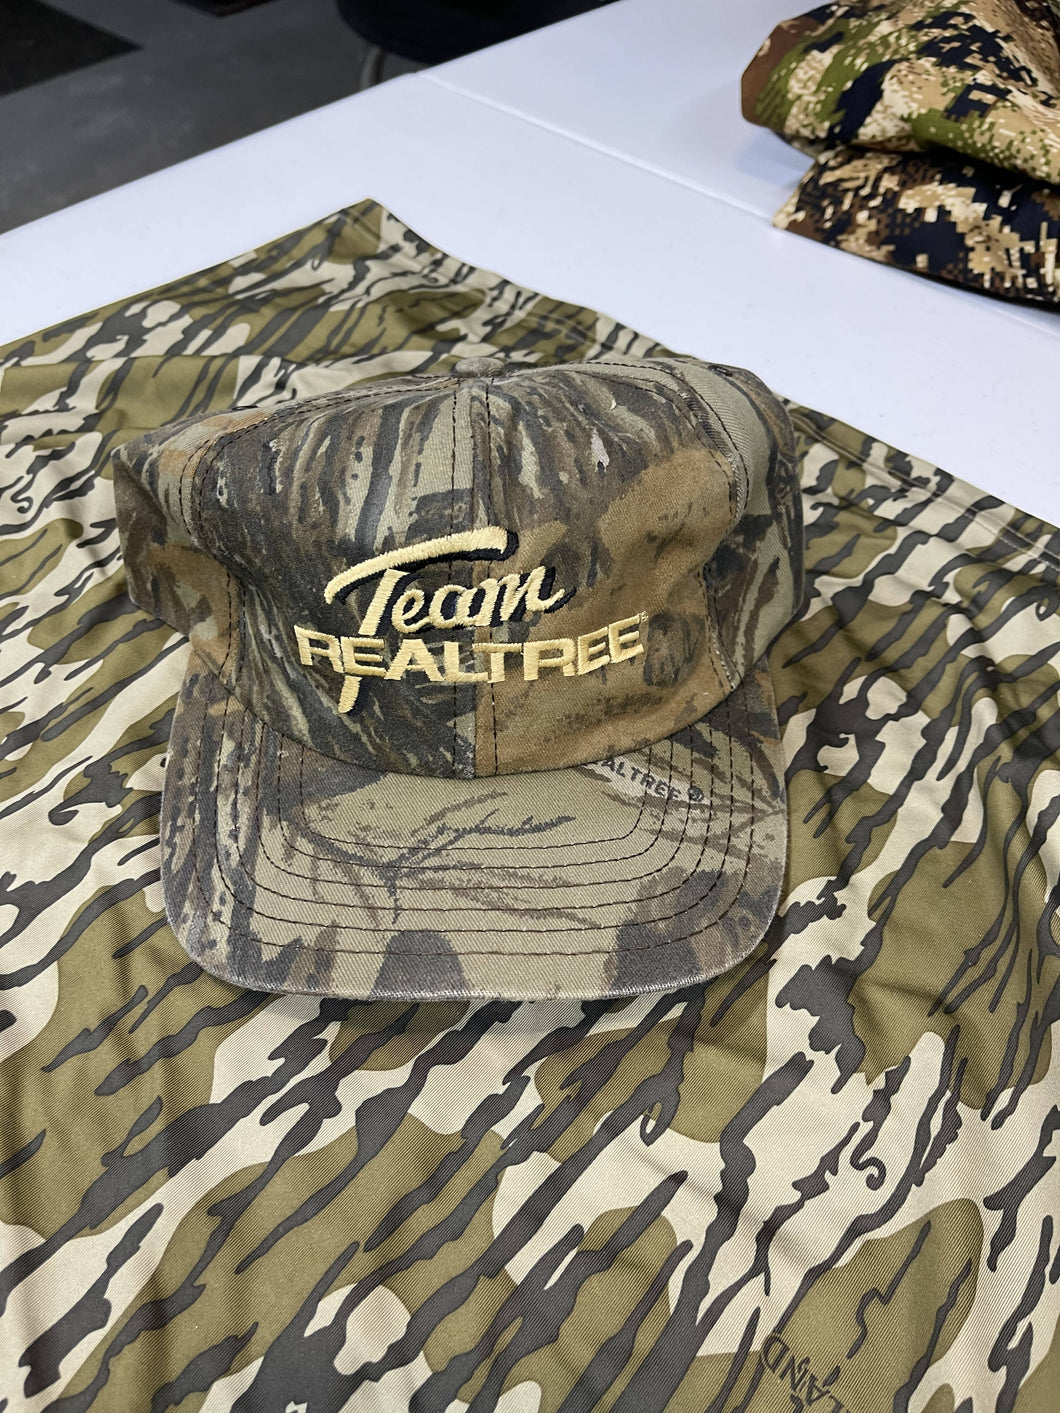 TEAM Realtree Hat